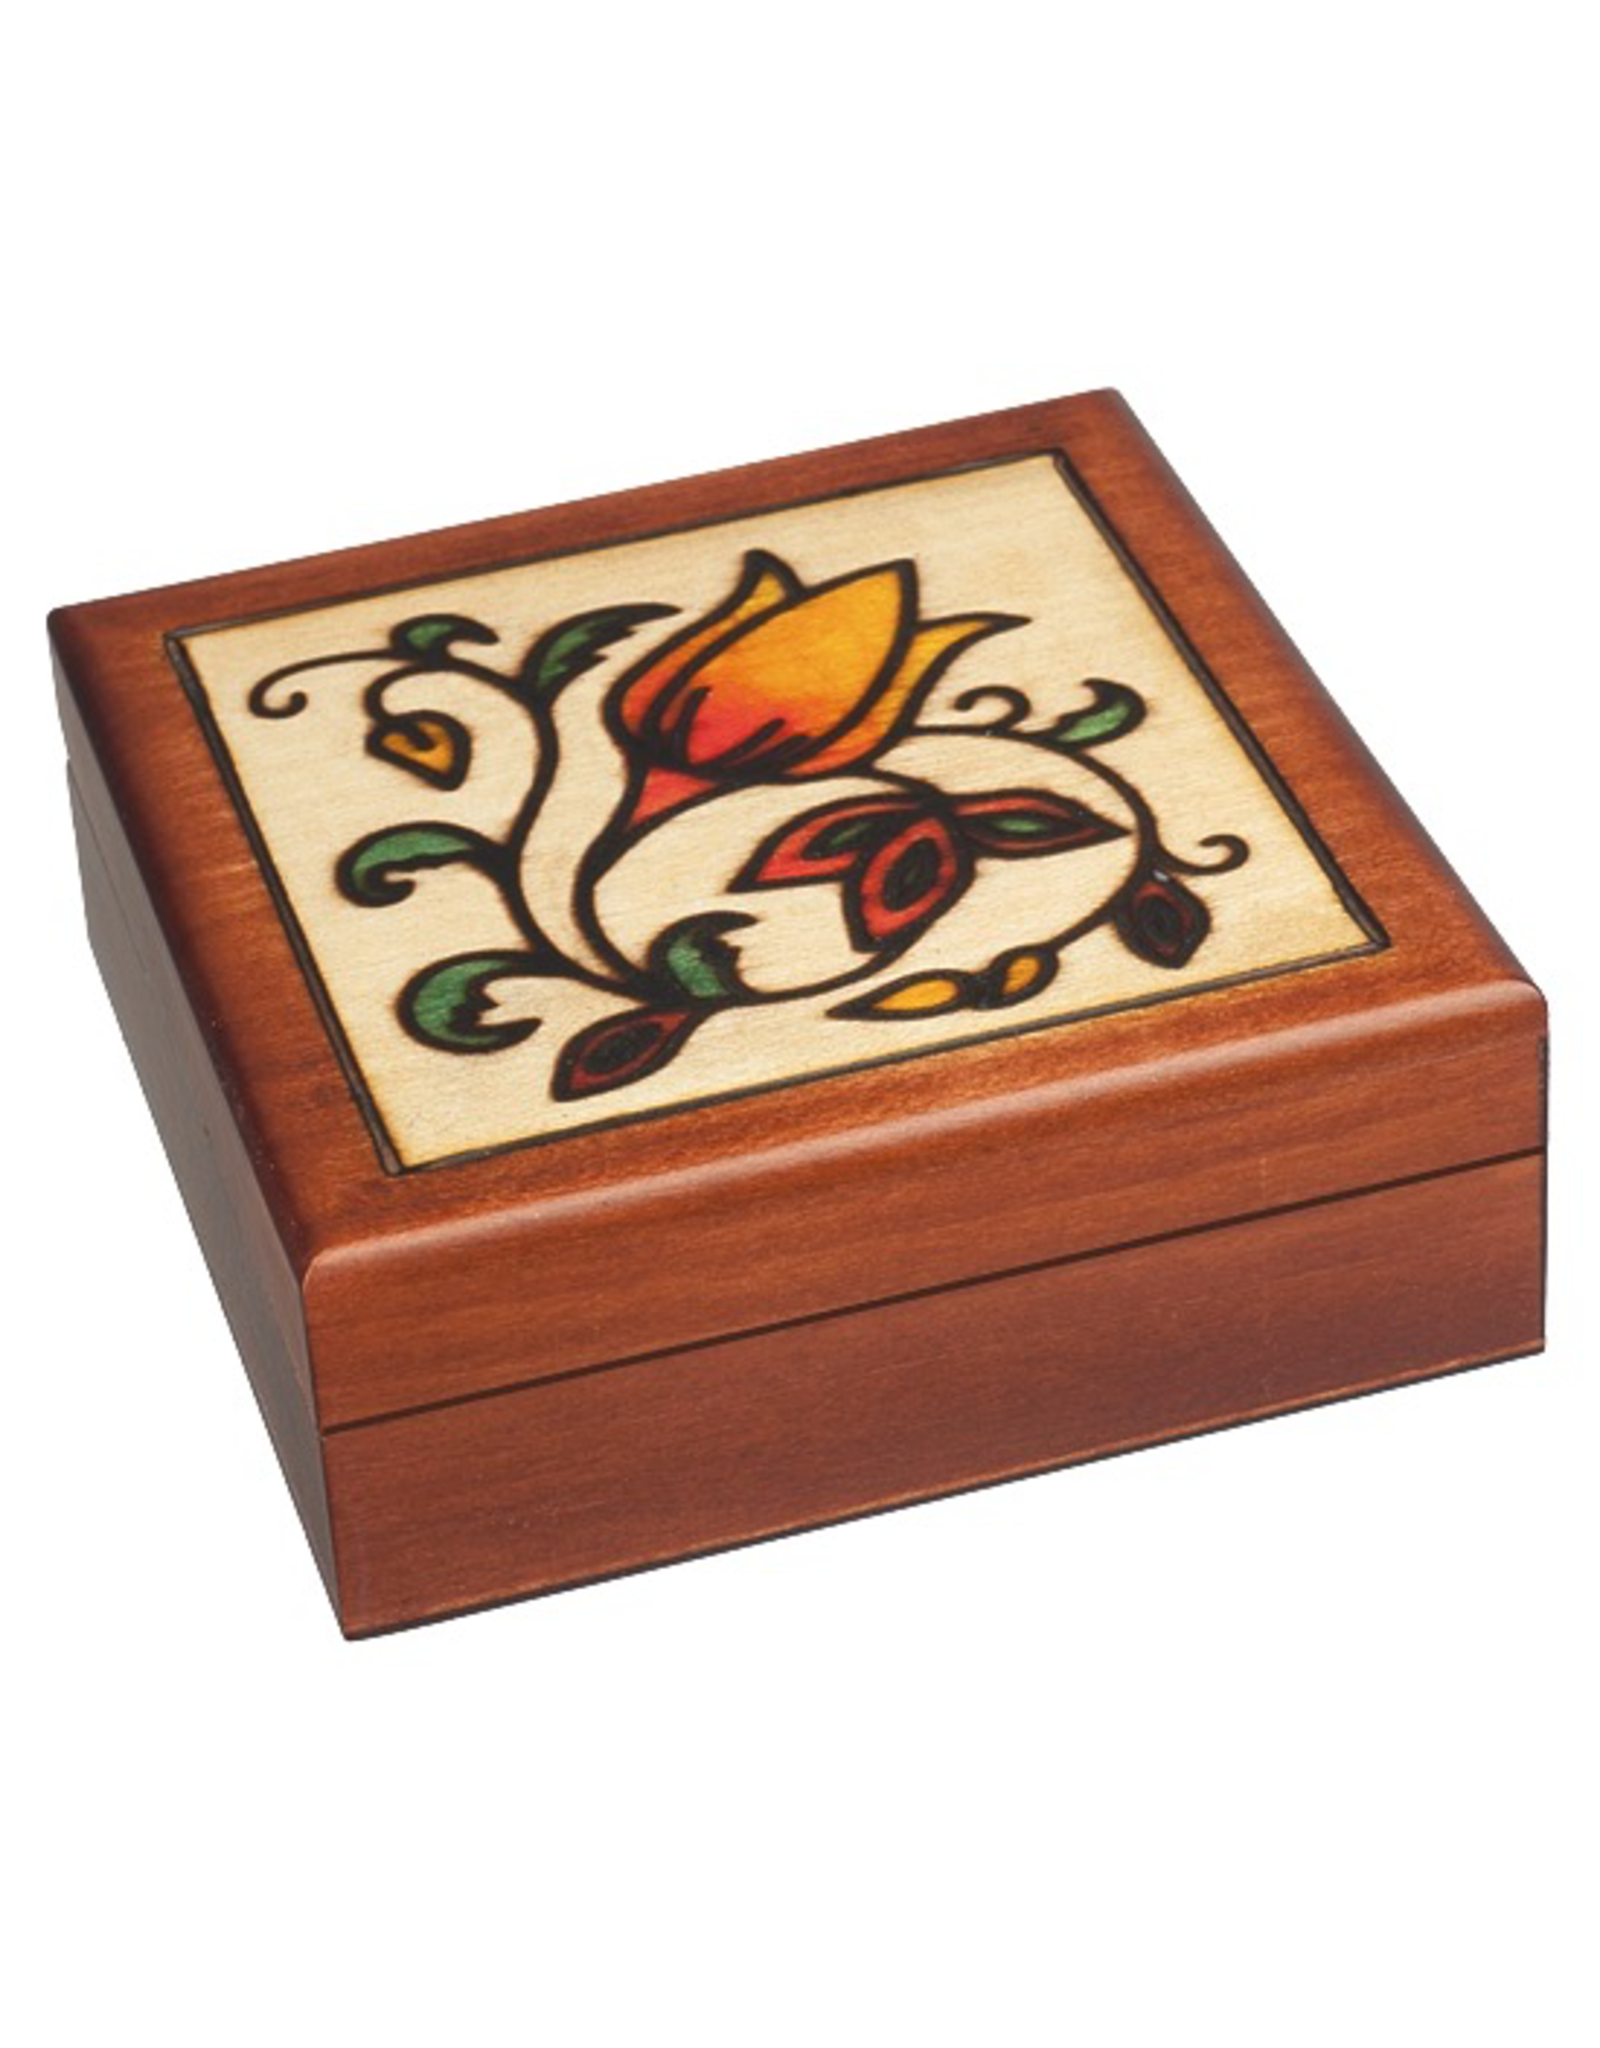 Enchanted Boxes Romantic Wood Box